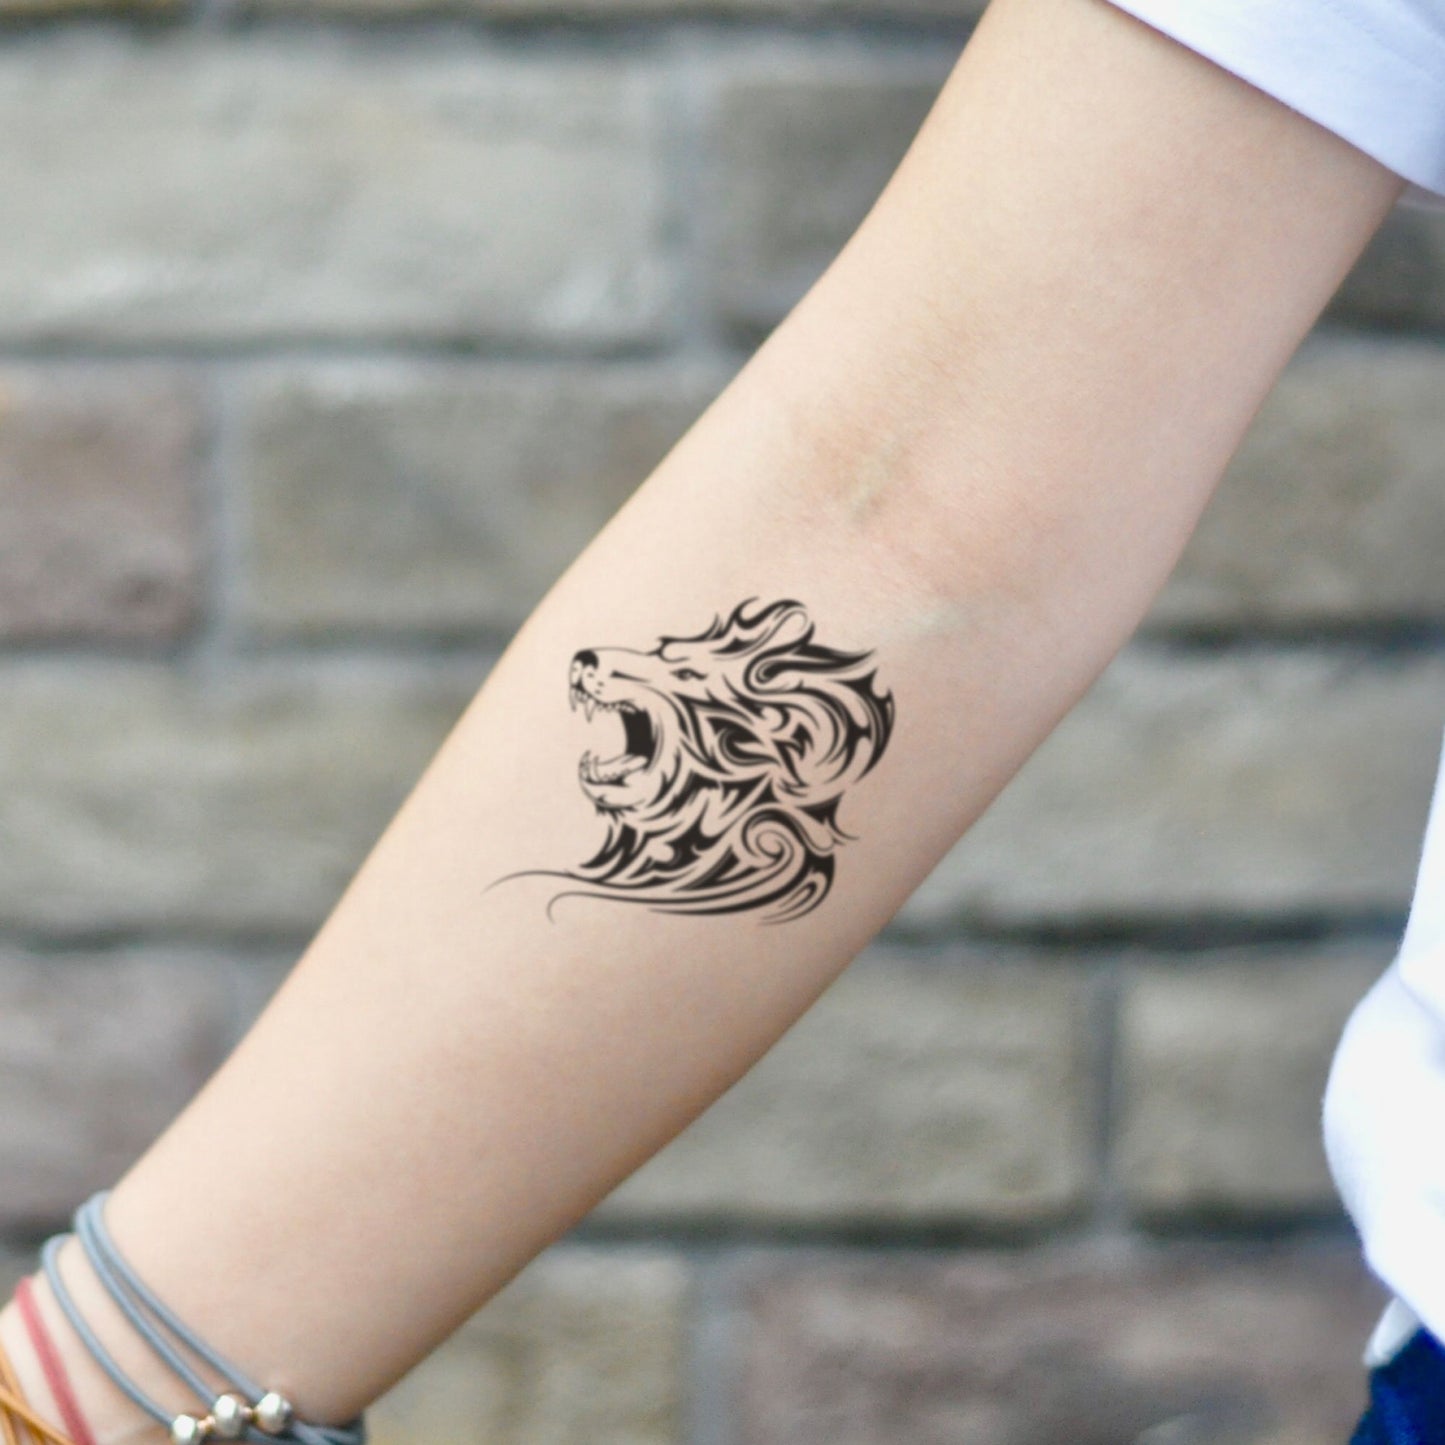 fake small angry lion head animal temporary tattoo sticker design idea on inner arm